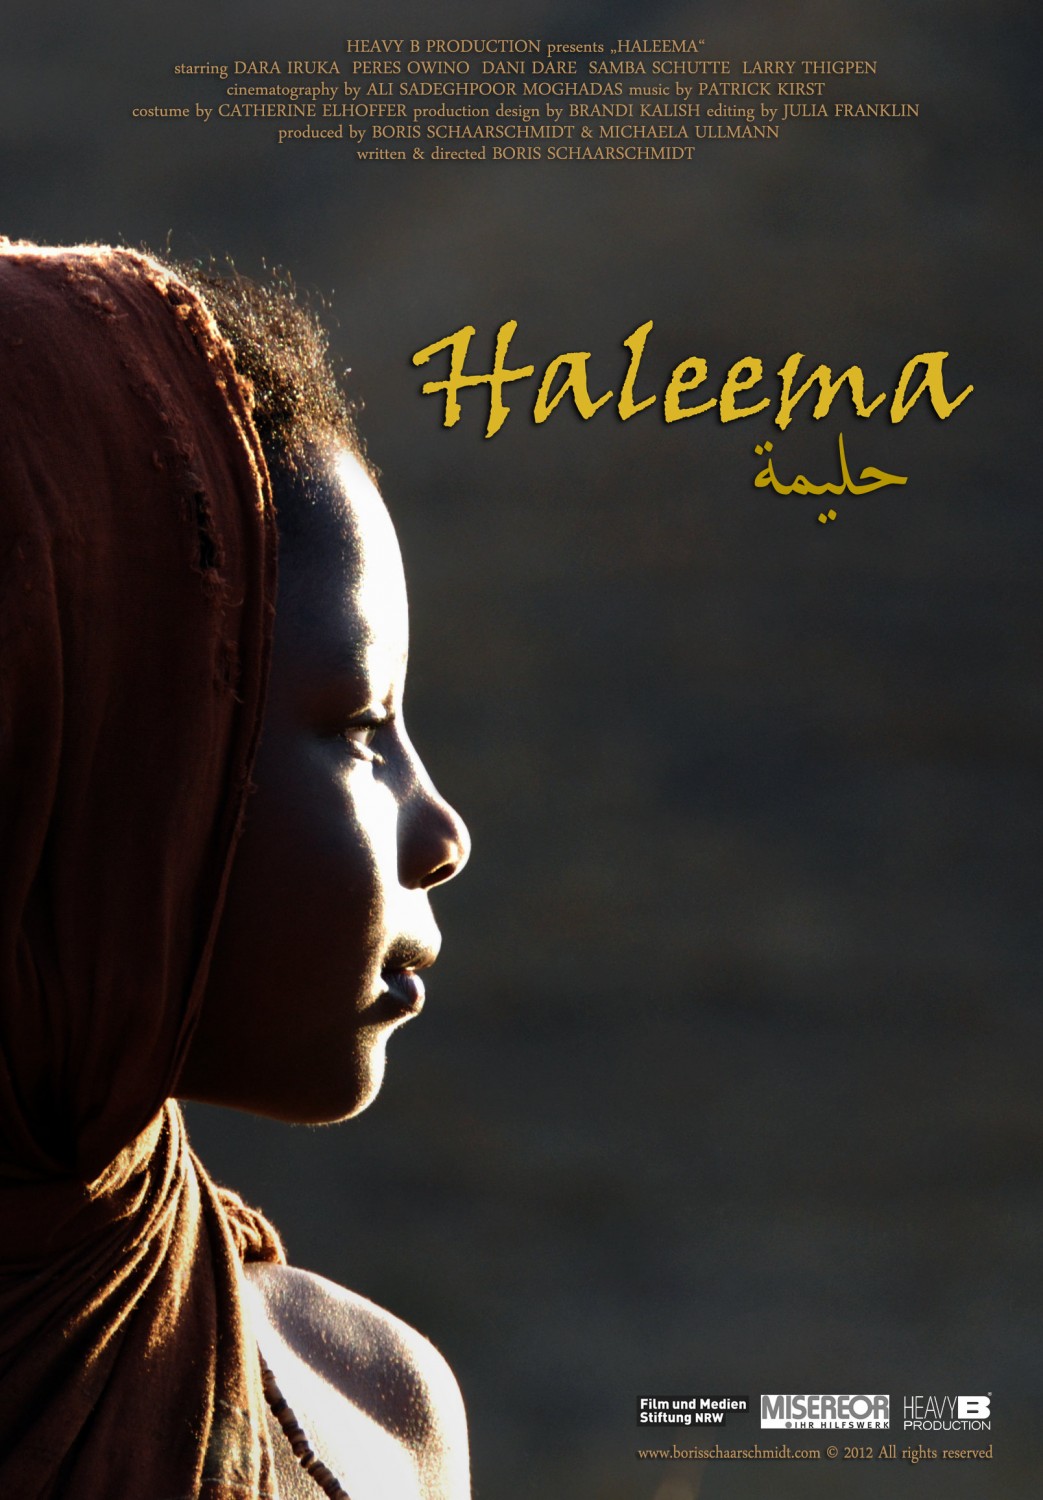 Extra Large Movie Poster Image for Haleema